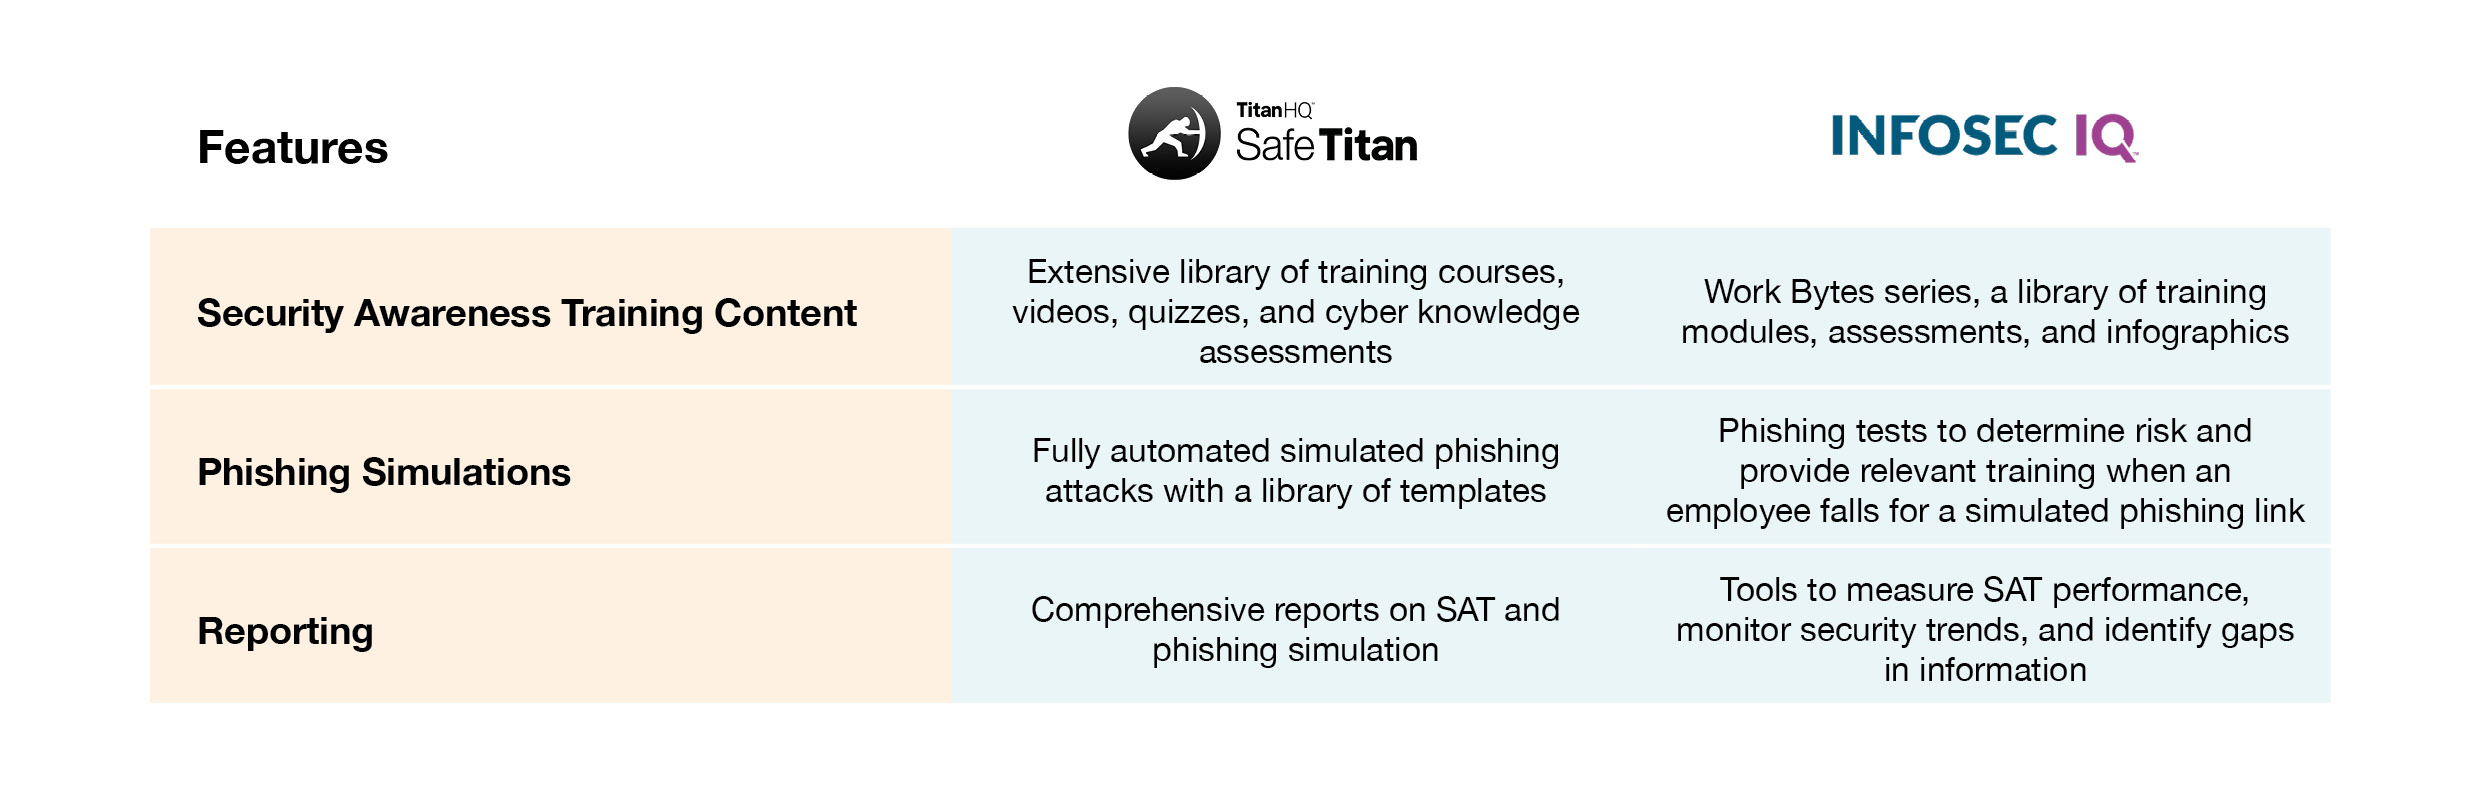 SafeTitan Security Awareness Training vs Infosec IQ